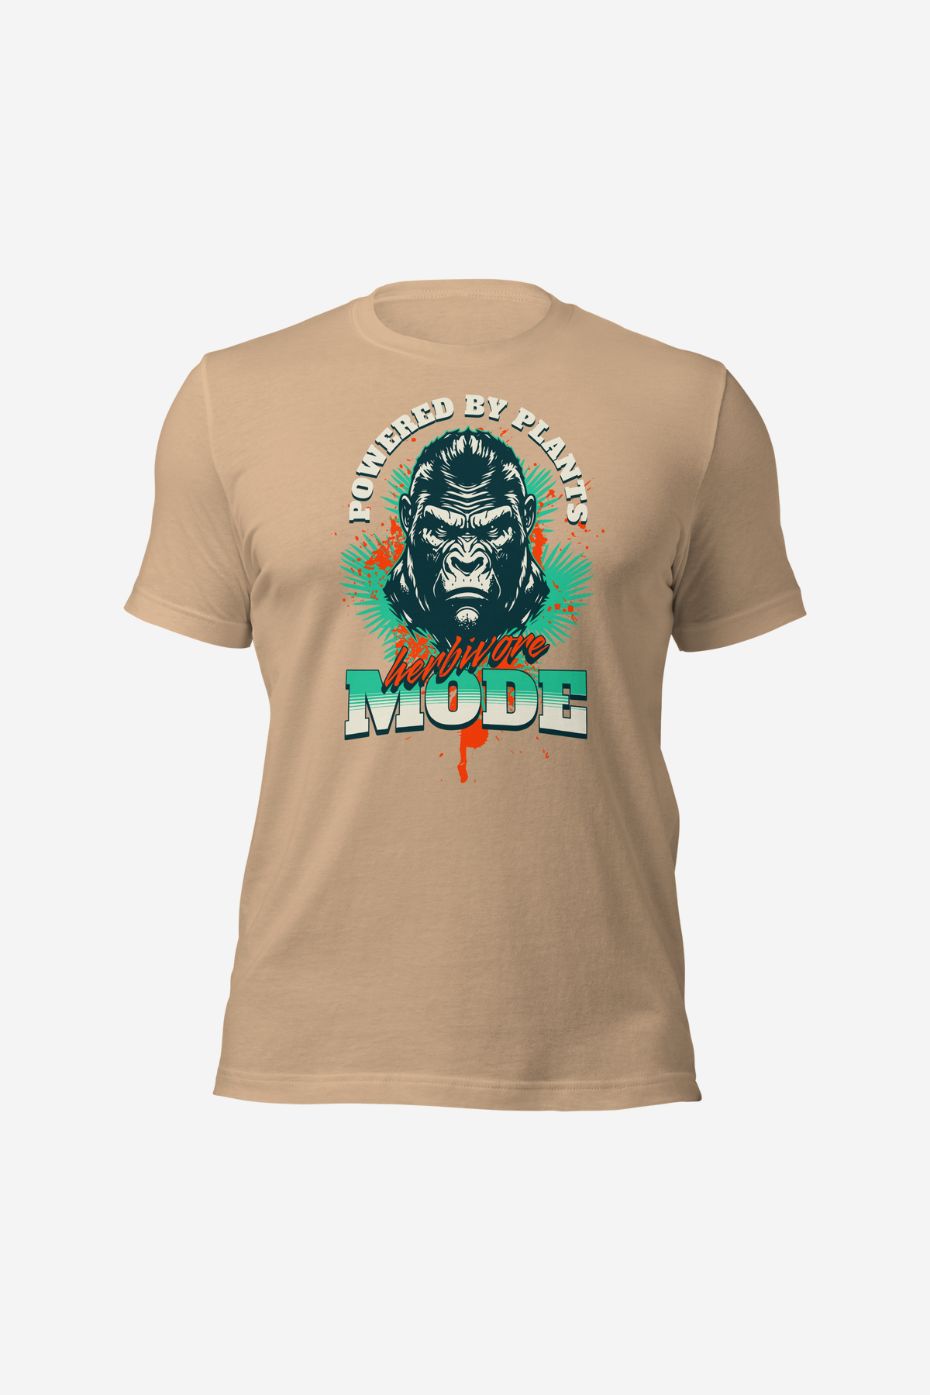 Herbivore Mode - Unisex t-shirt